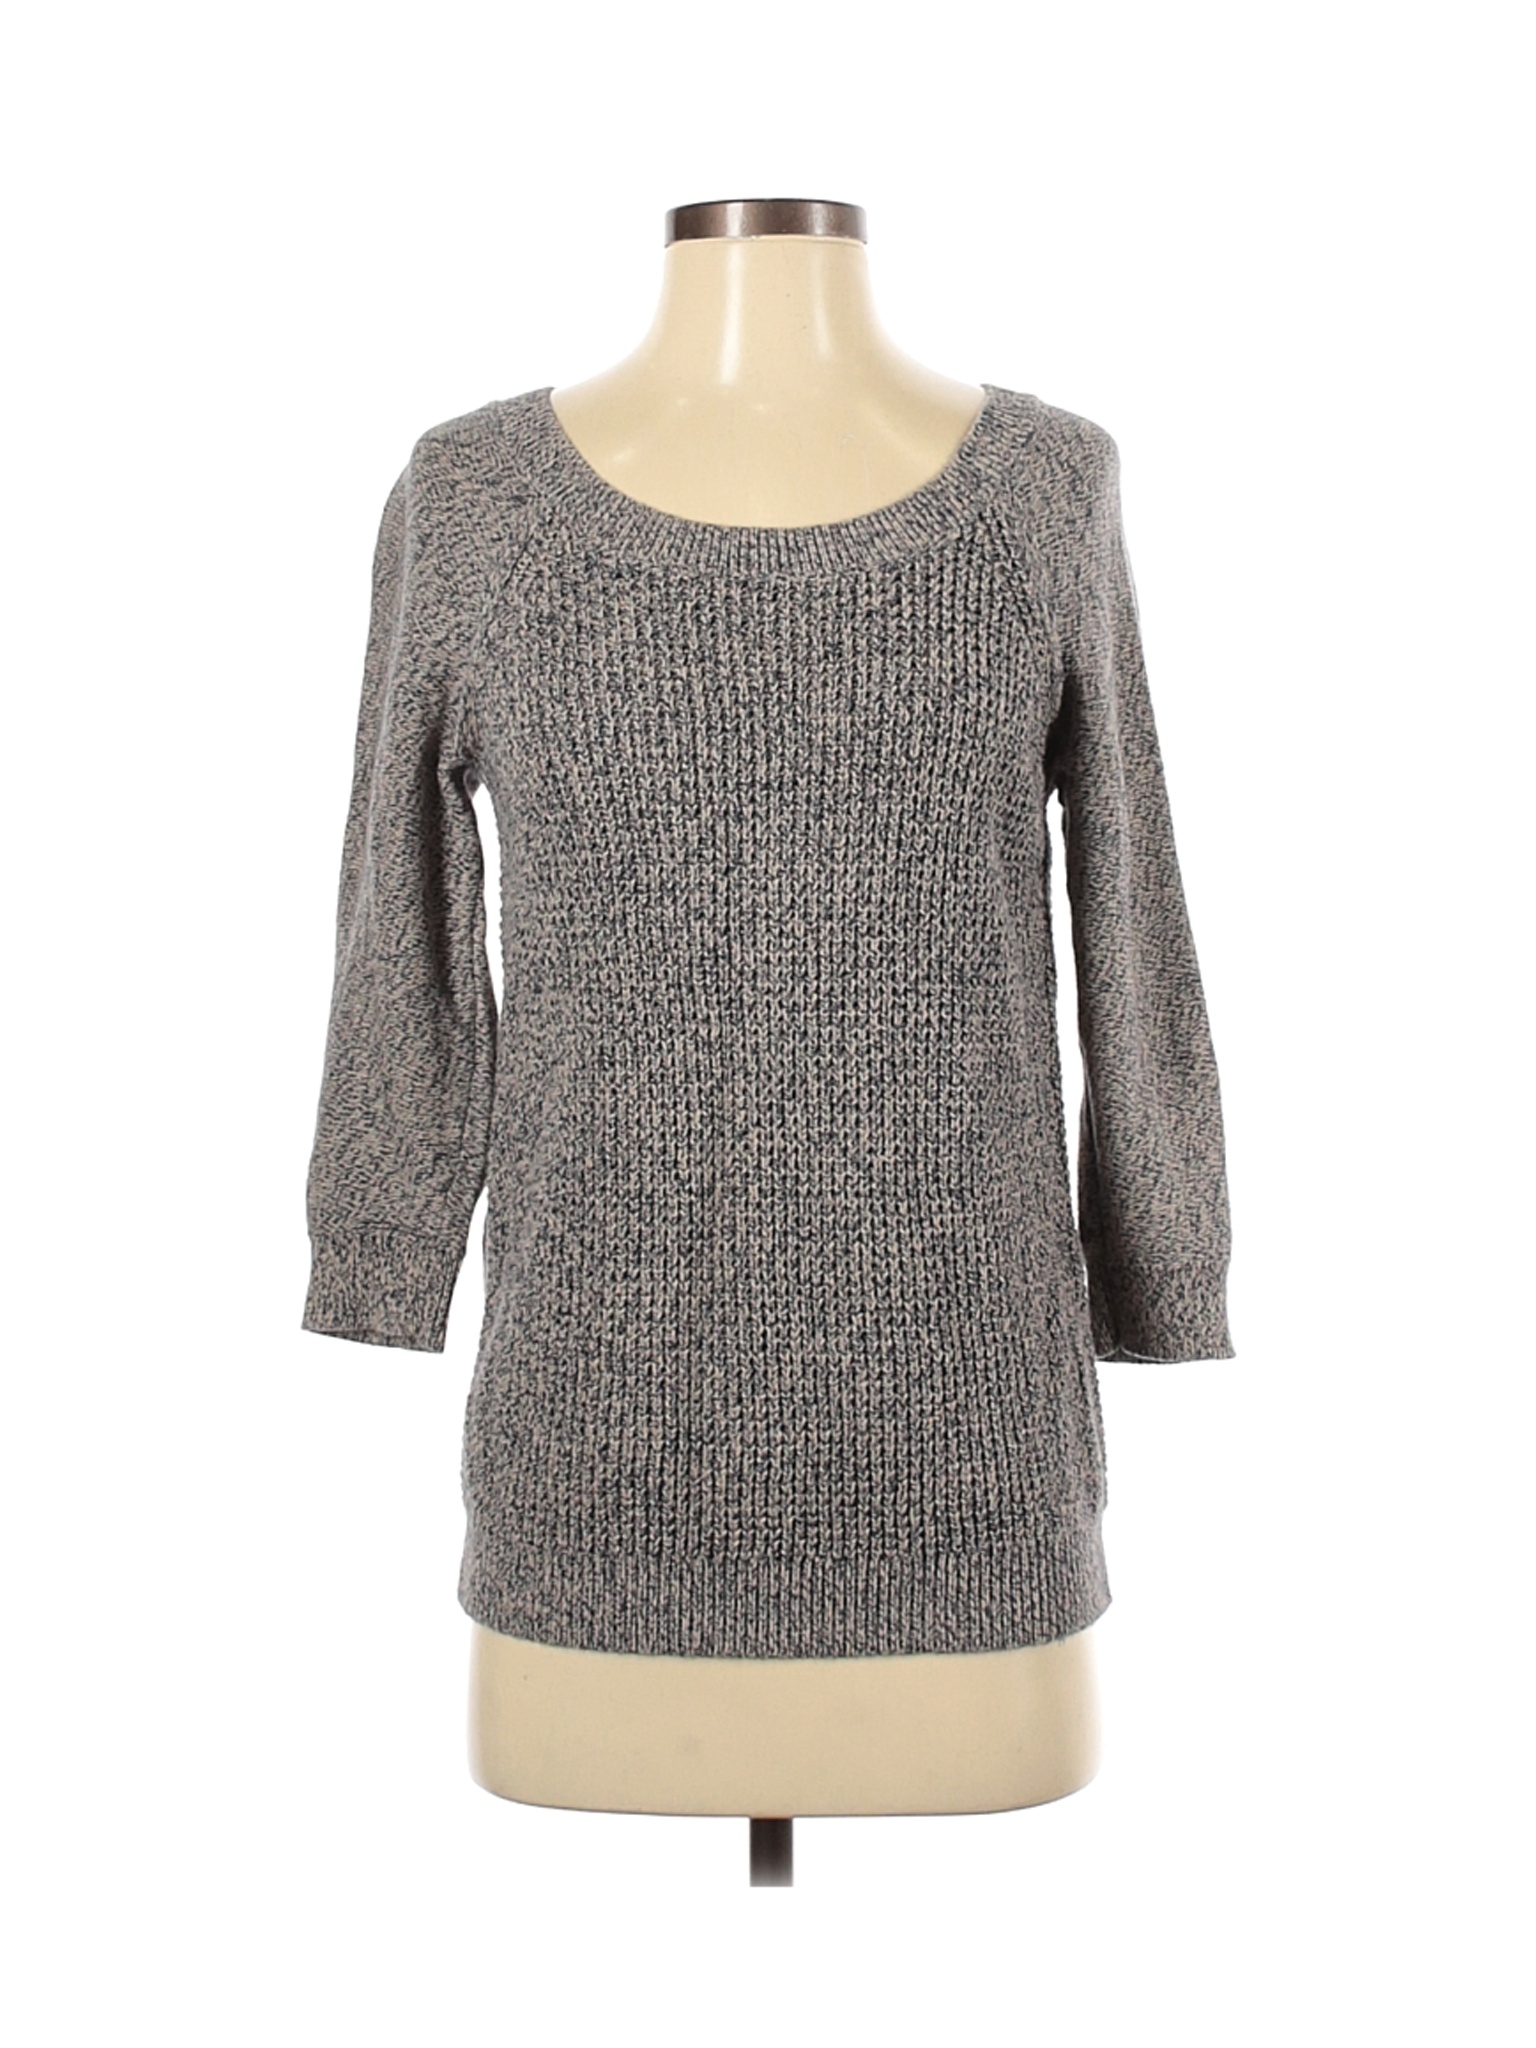 Ann Taylor Women Gray Pullover Sweater S | eBay